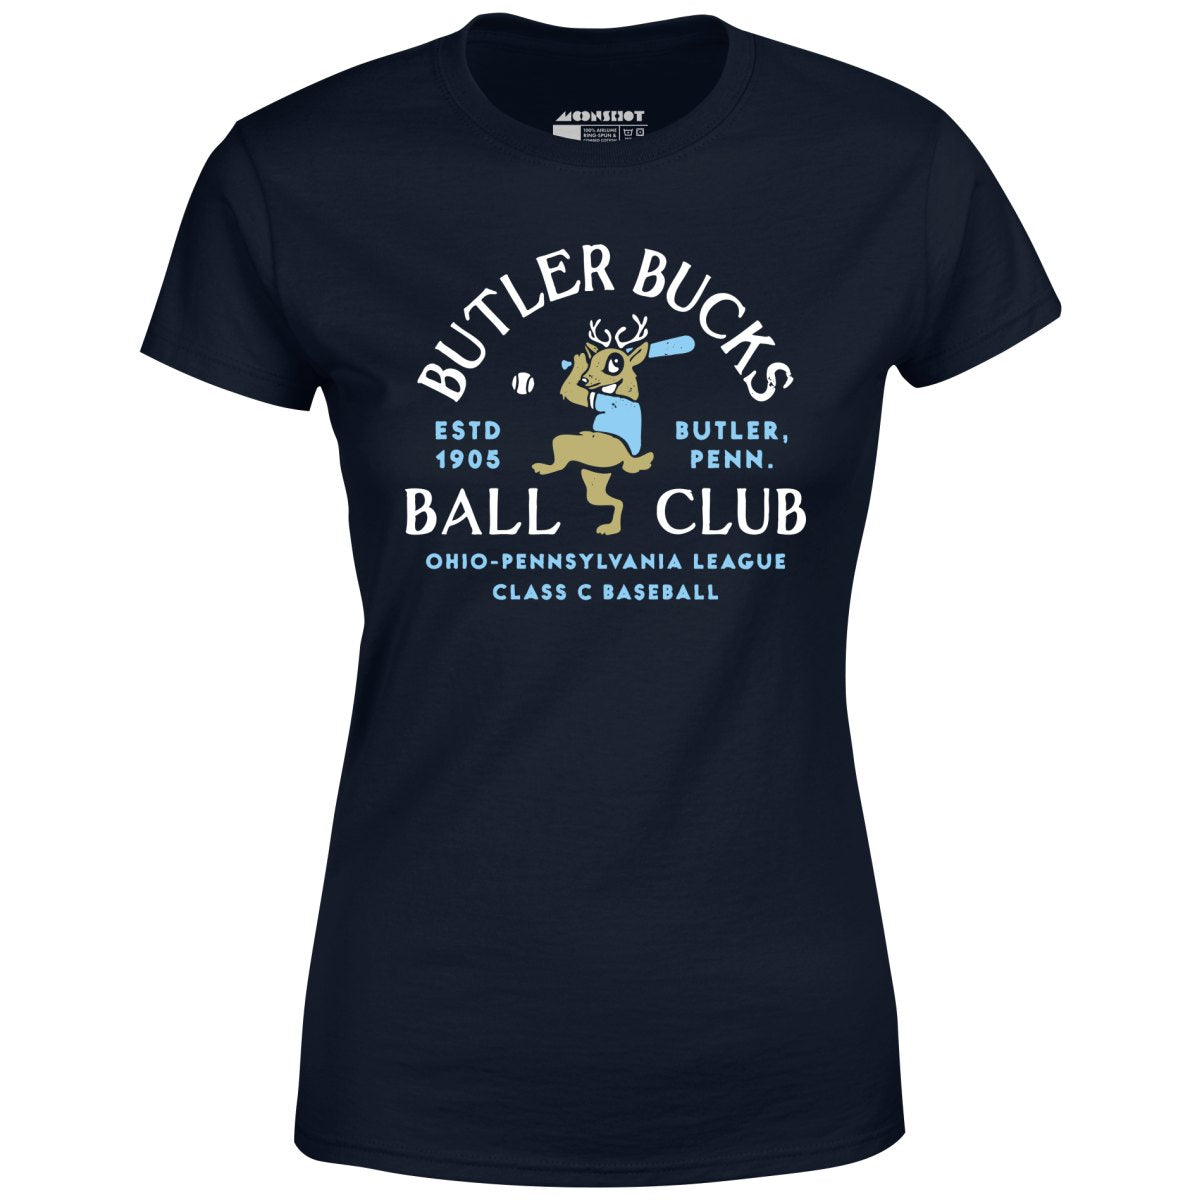 Butler Bucks - Pennsylvania - Vintage Defunct Baseball Teams - Women's T-Shirt